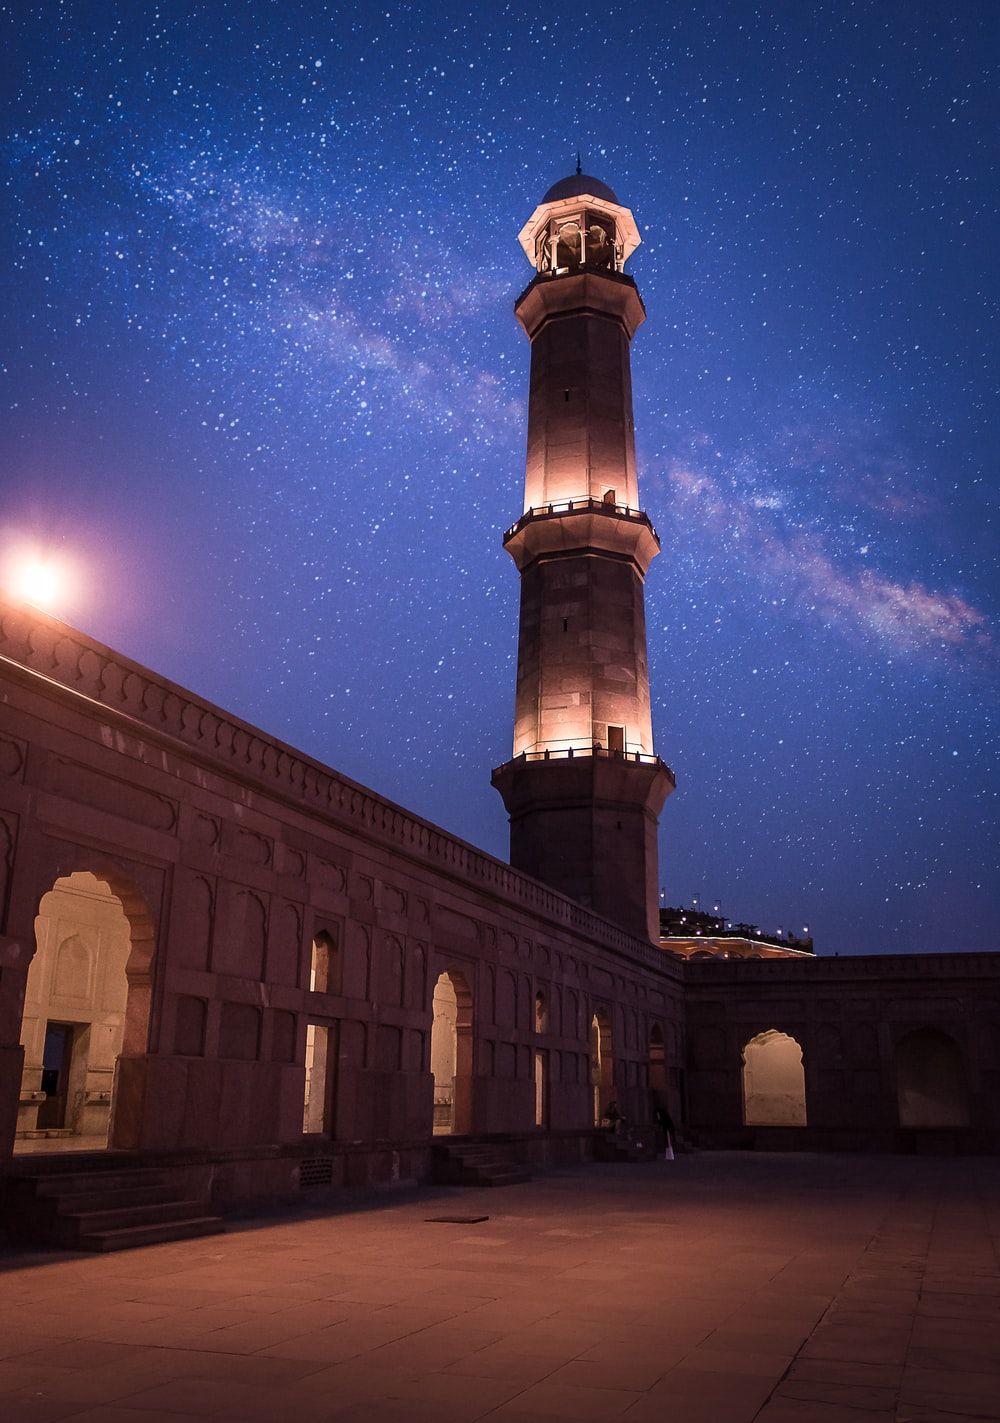 Badshahi Mosque, Lahore, Pakistan Picture. Download Free Image